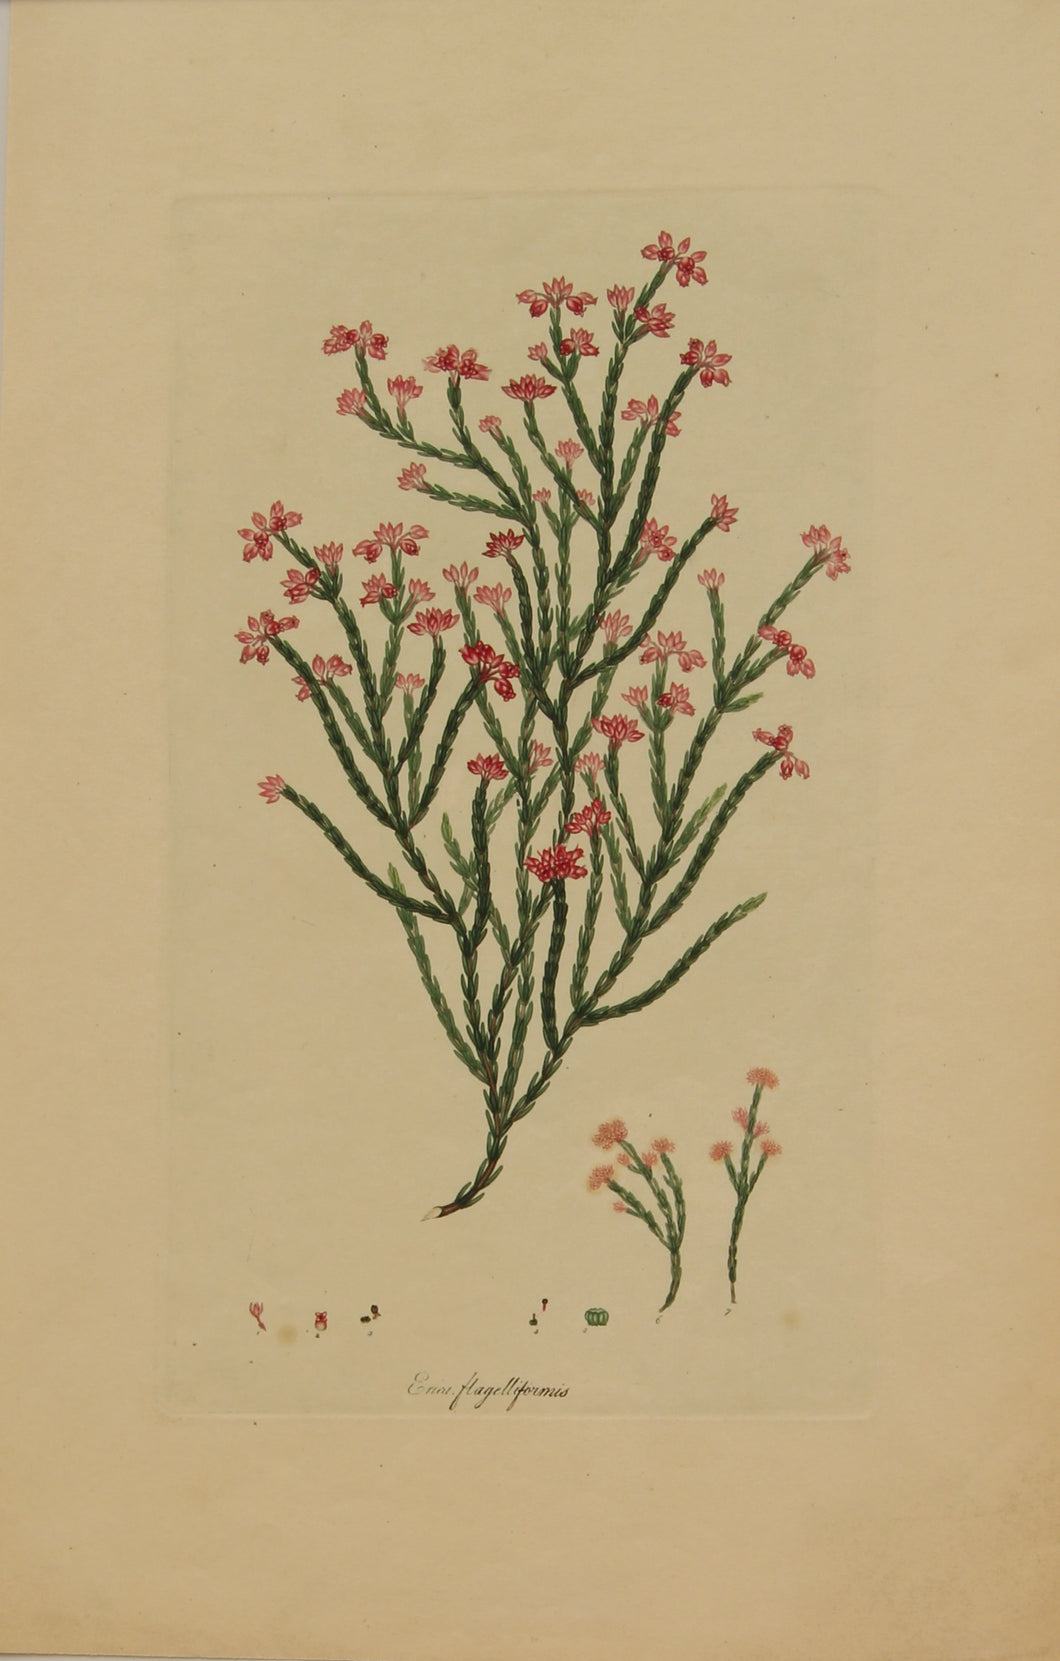 Botanical, Andrews Henry, Erica Flagelliformis, Copperplate Engraving,1797